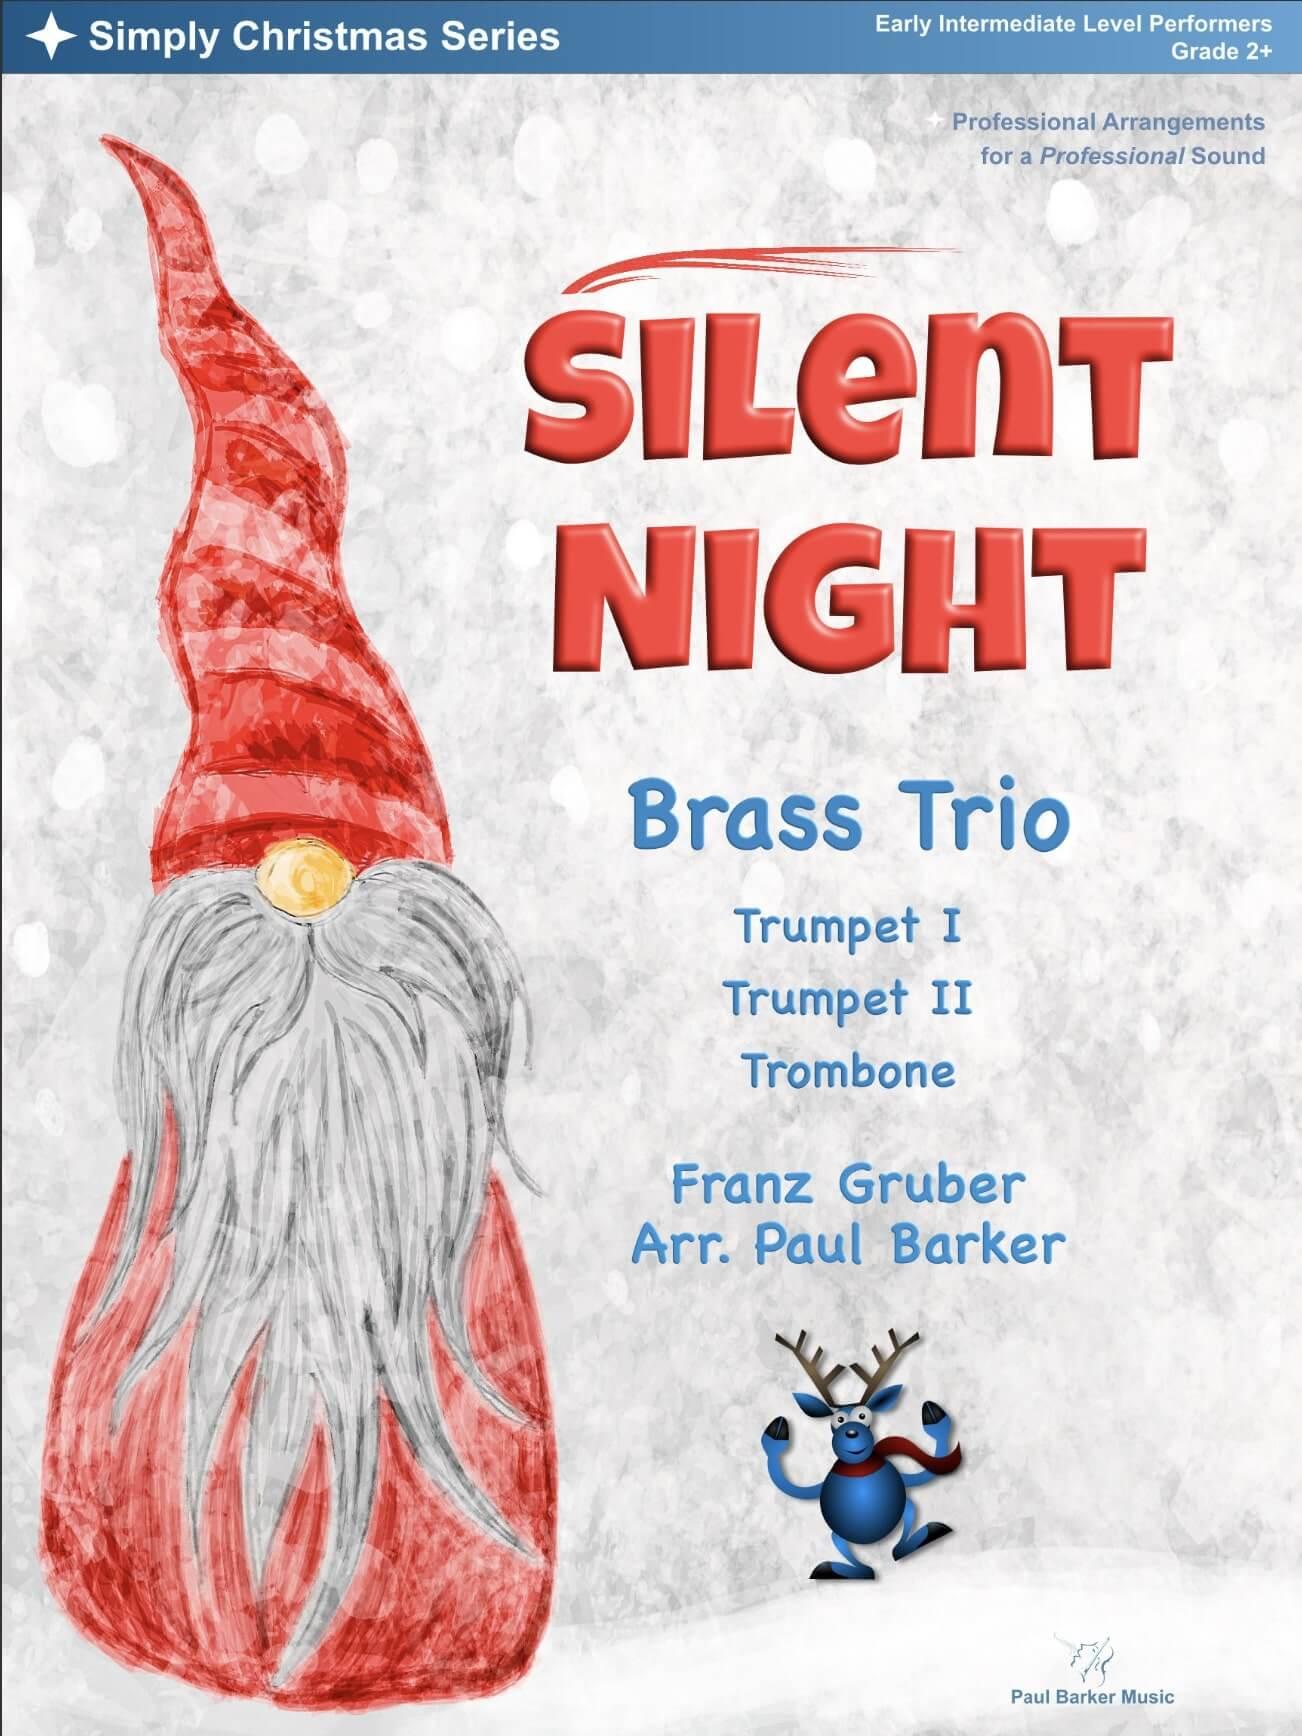 Silent Night (Brass Trio) - Paul Barker Music 